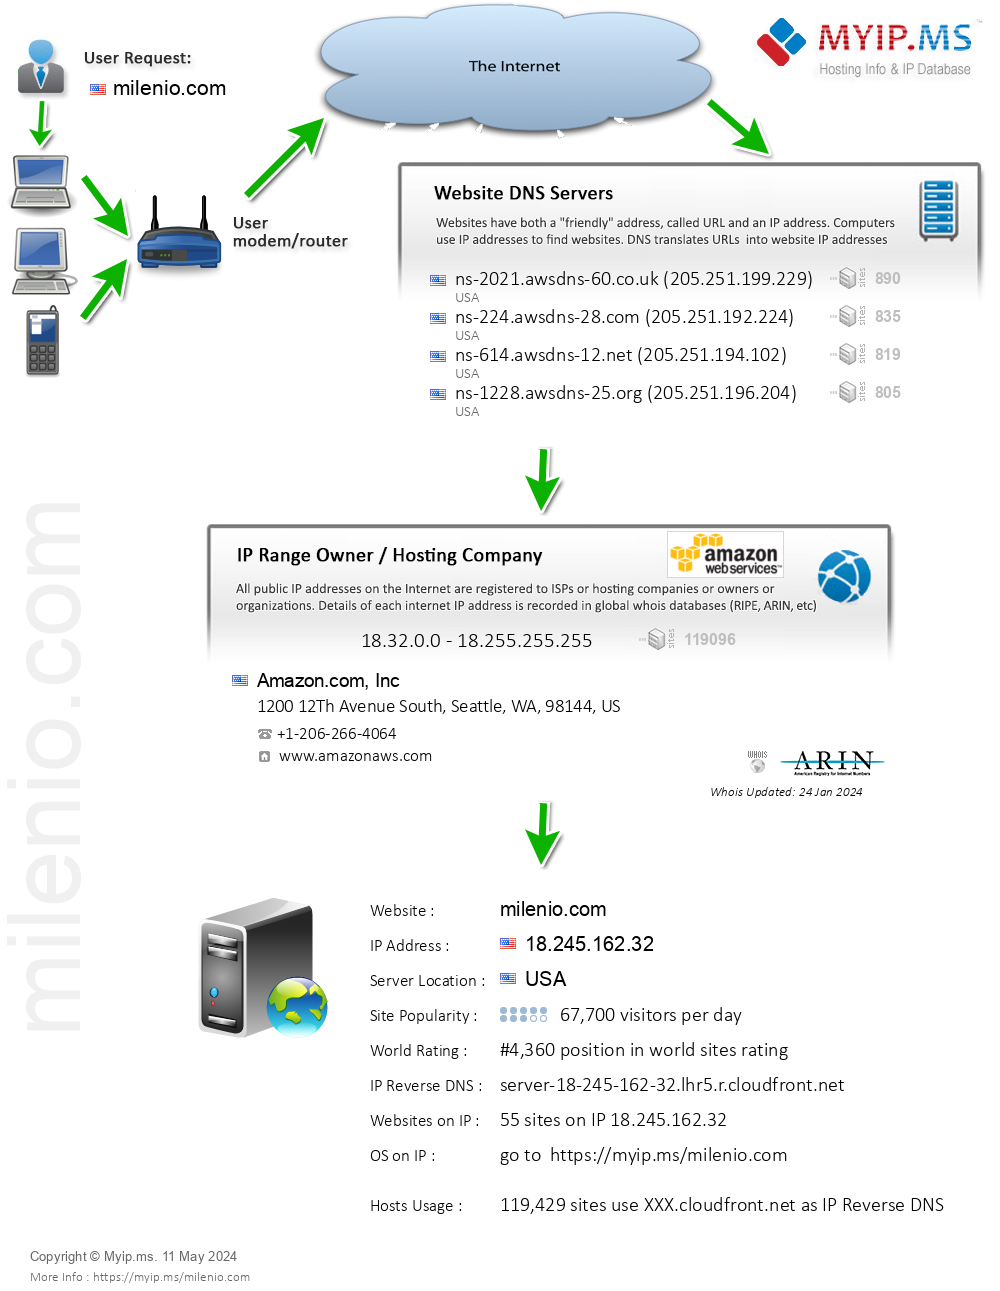 Milenio.com - Website Hosting Visual IP Diagram